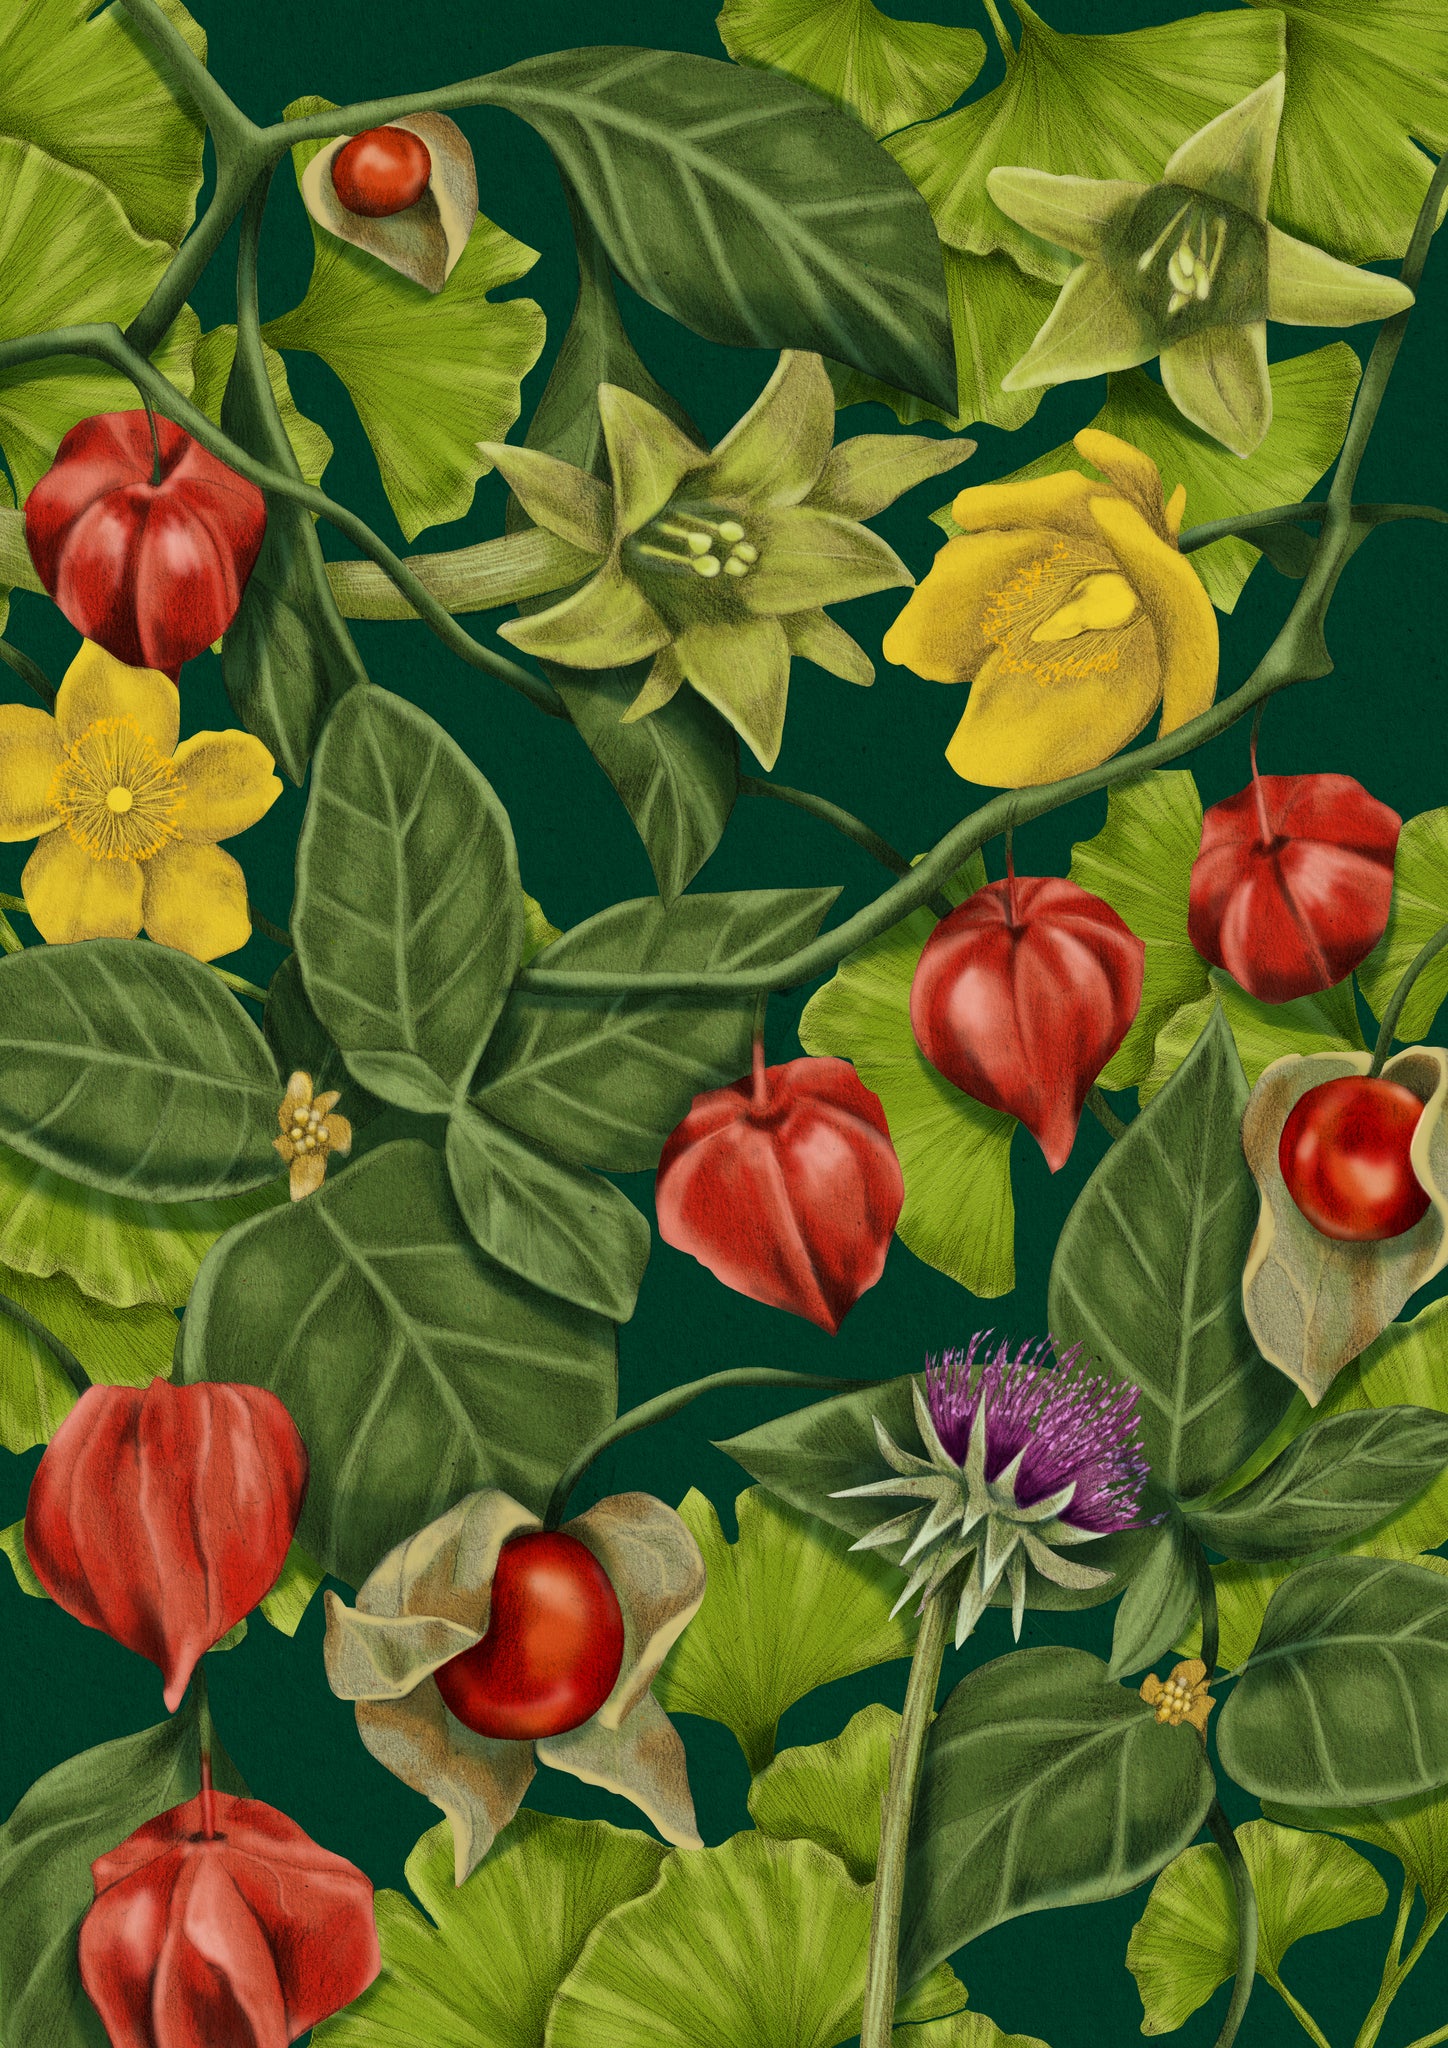 Kelly Thompson botanical illustration for Thompson's Herbals featuring the Ashwaganda plant  